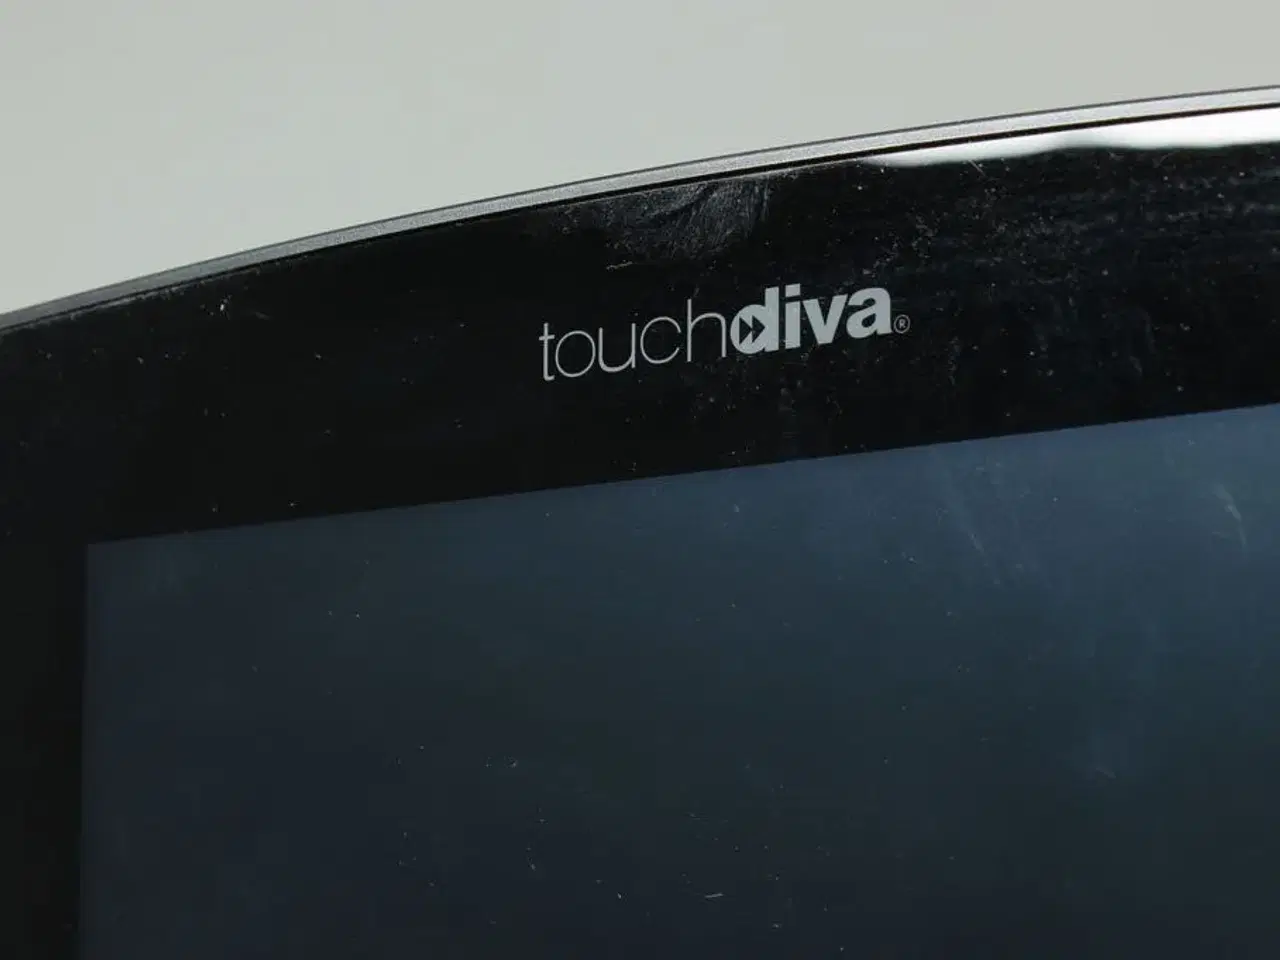 Billede 5 - Netværksafspiller, Touchdiva Touch diva 